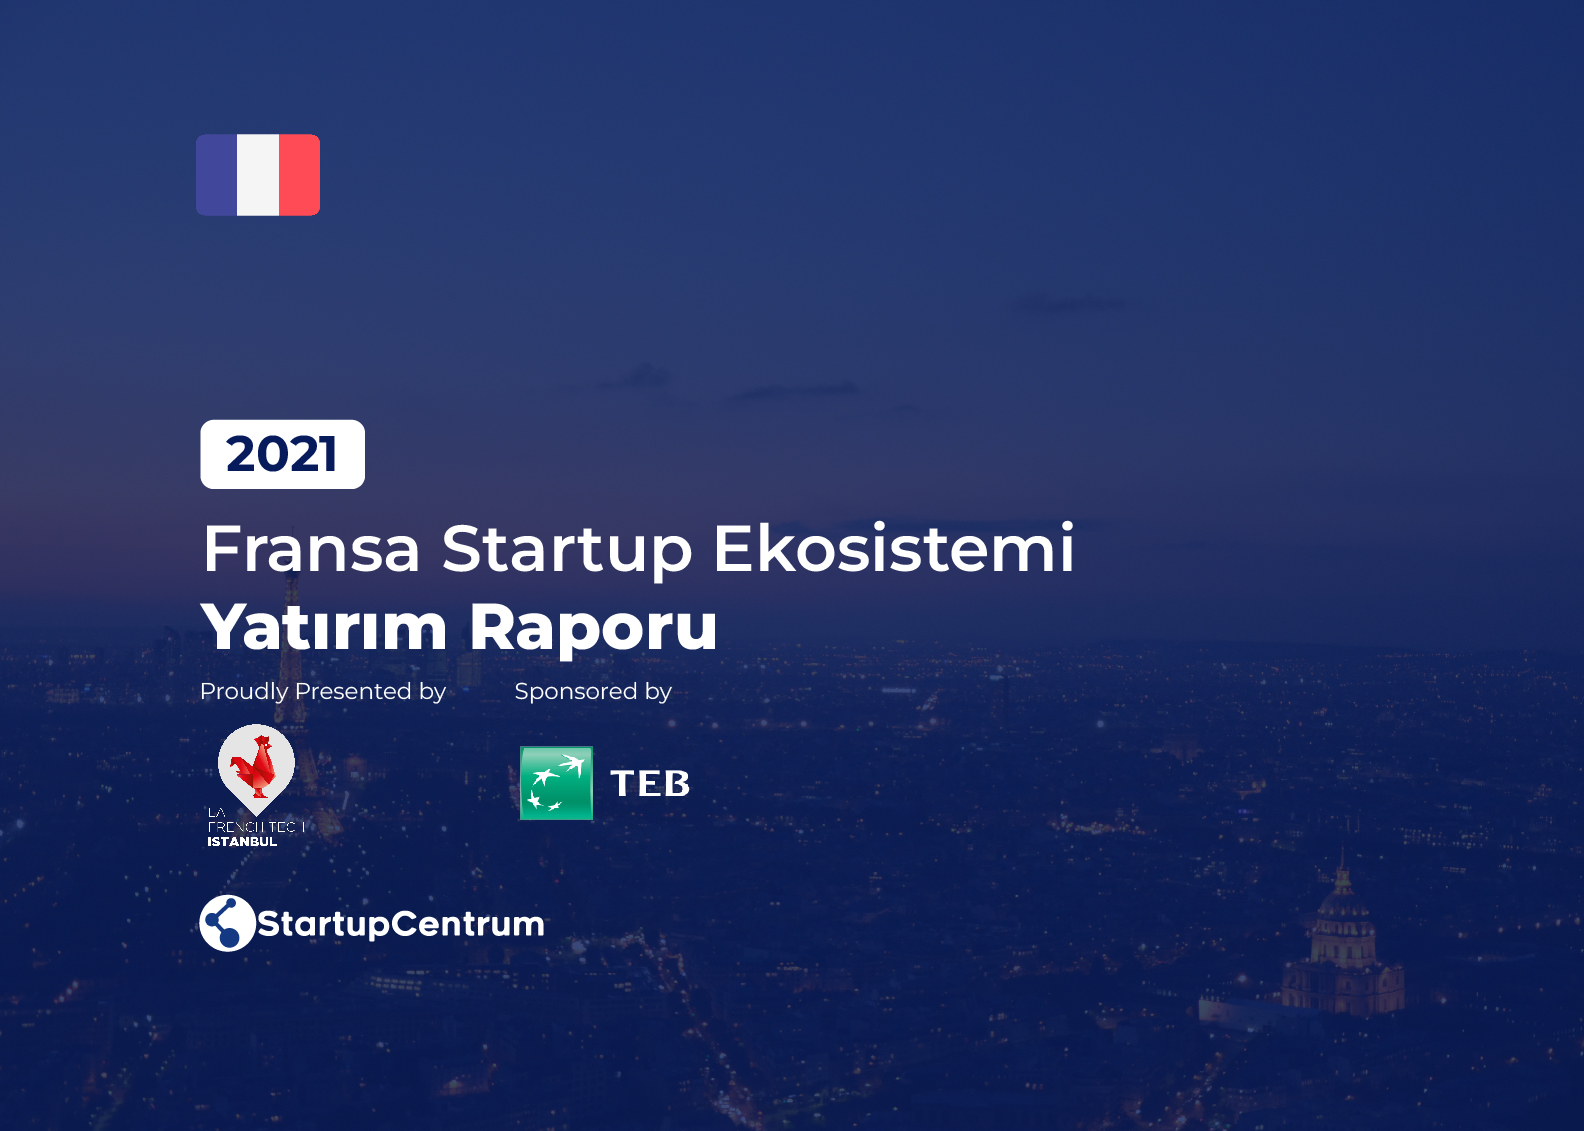 2021 - Fransa Startup Ekosistemi Yatırım Raporu Cover Image